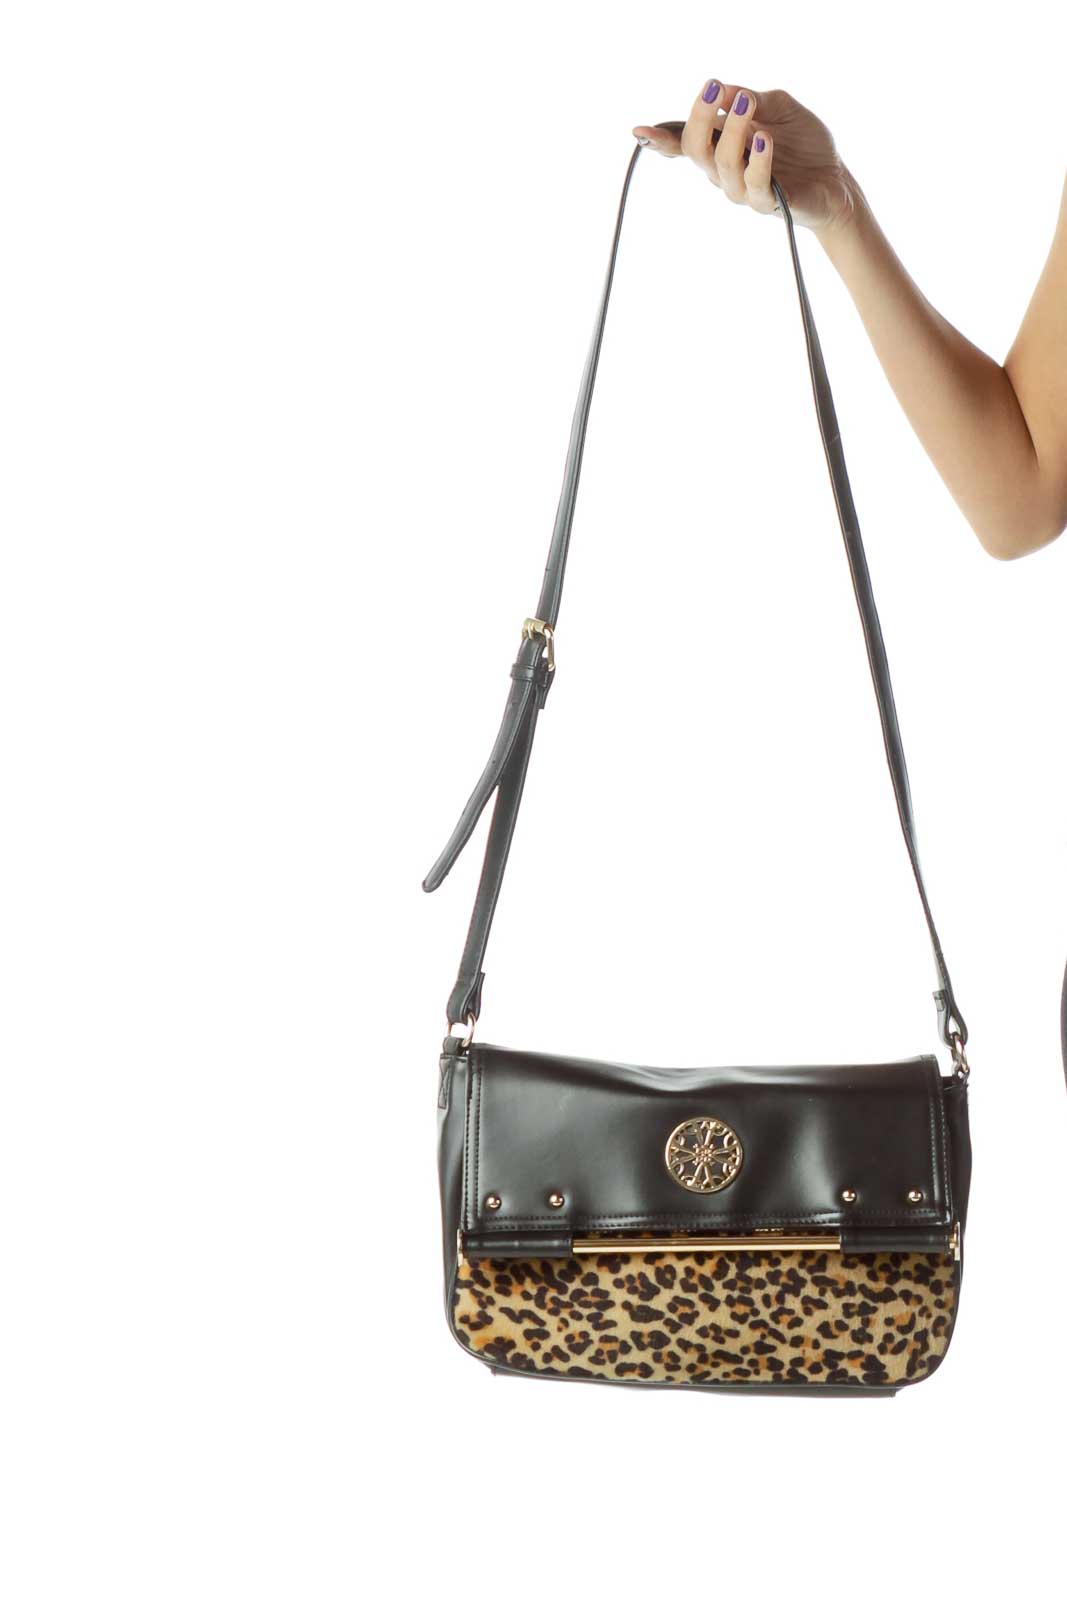 Black Faux-Leather Leopard Print Crossbody Bag Front